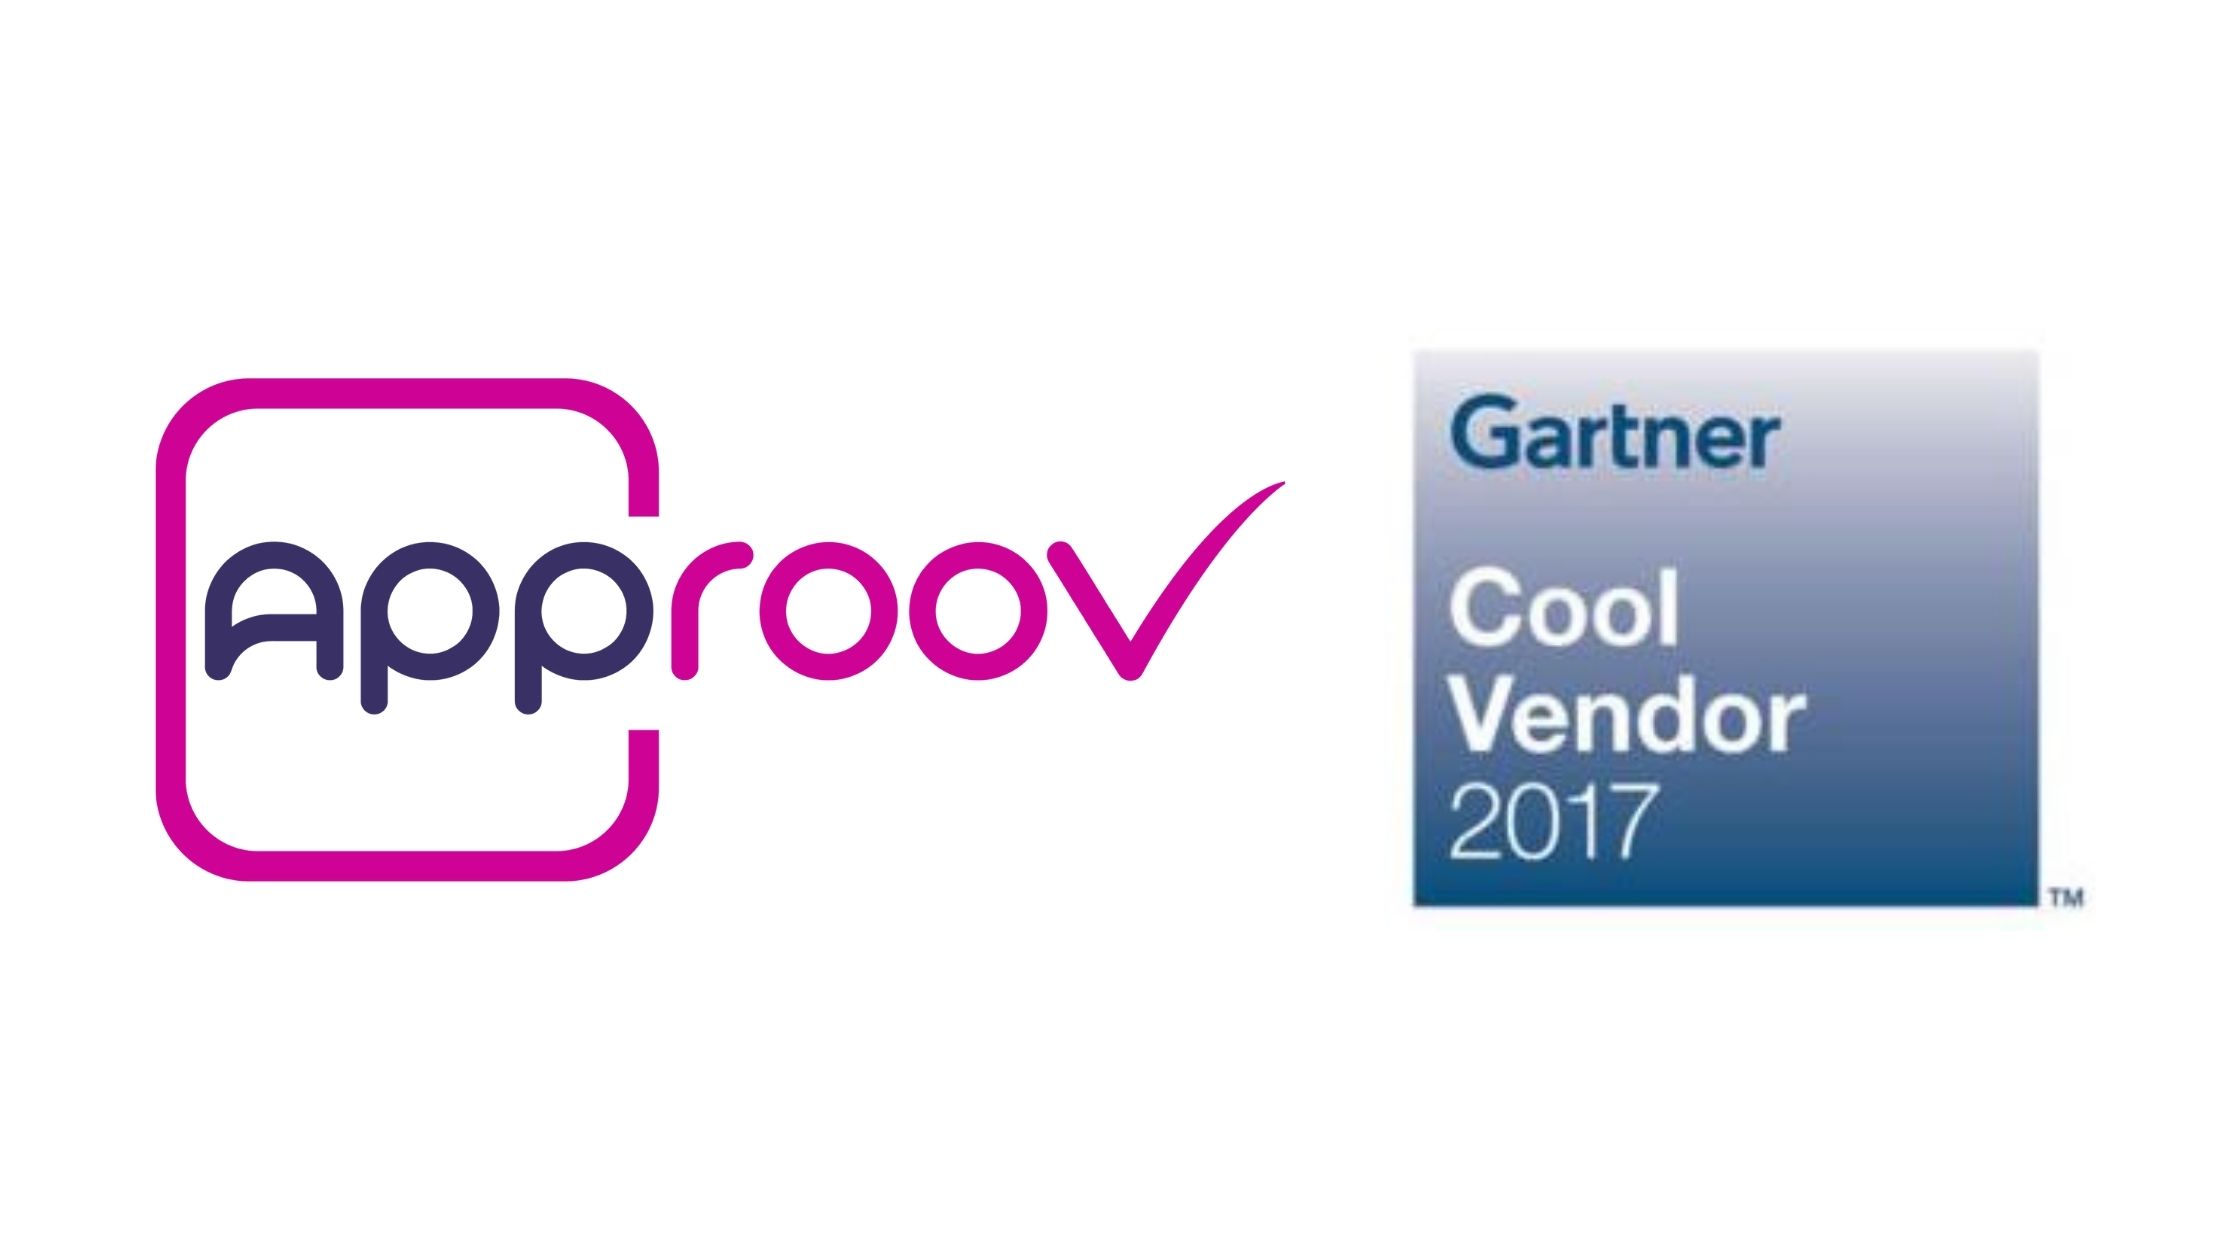 Approov logo next to Gartner Cool Vendor logo